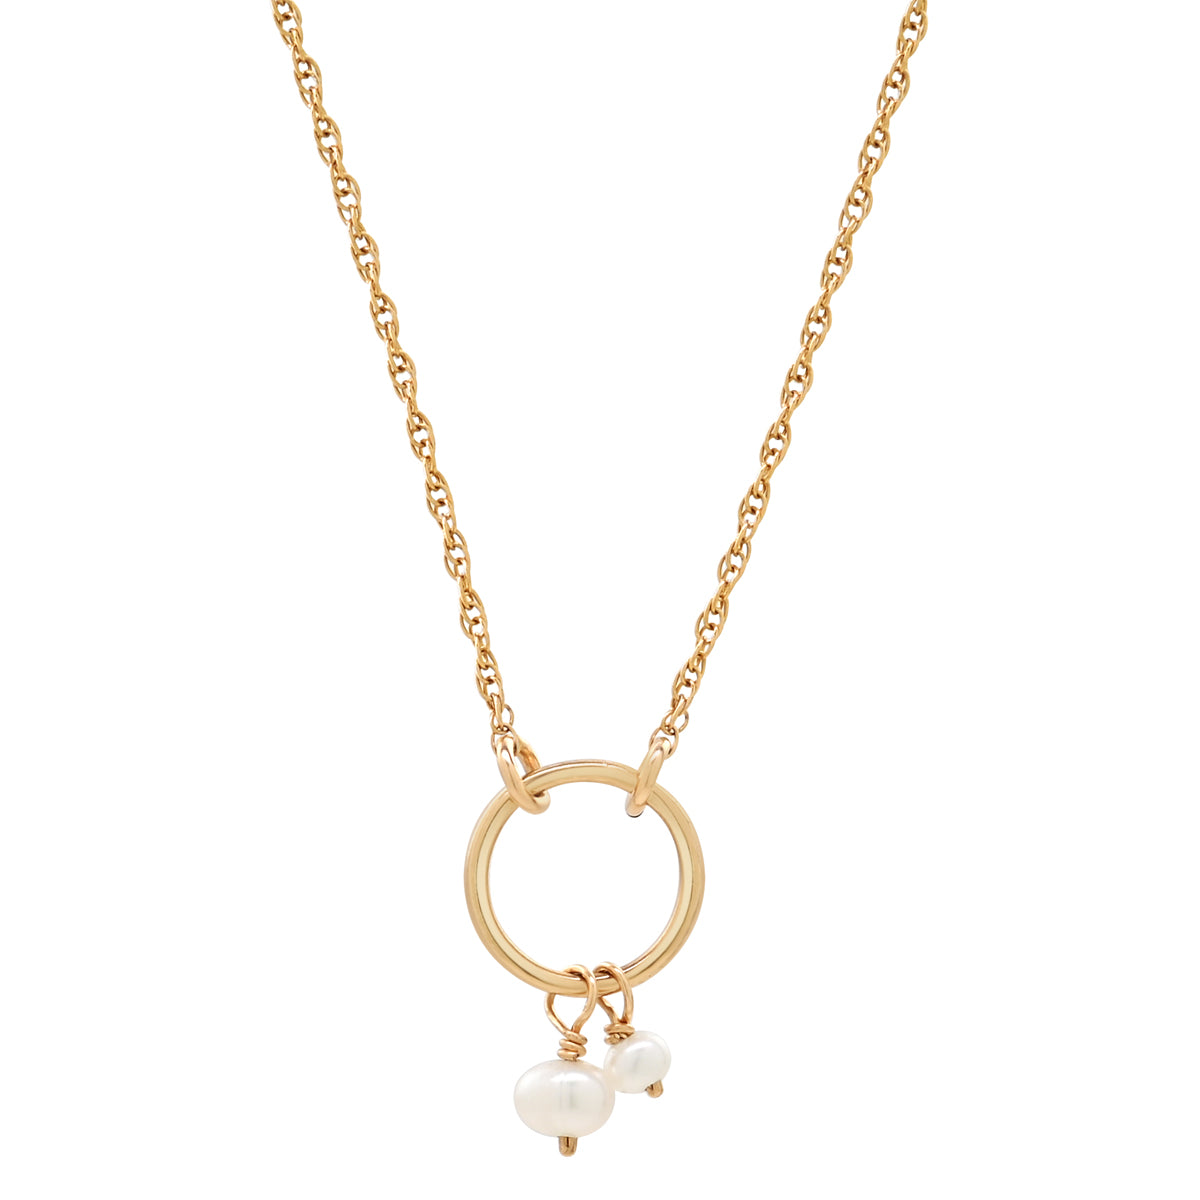 Beautiful Pearl Necklace Designs - Original Pearl Choker Necklace Design |  Choker necklace designs, Pearl necklace designs, Modern pearl necklace